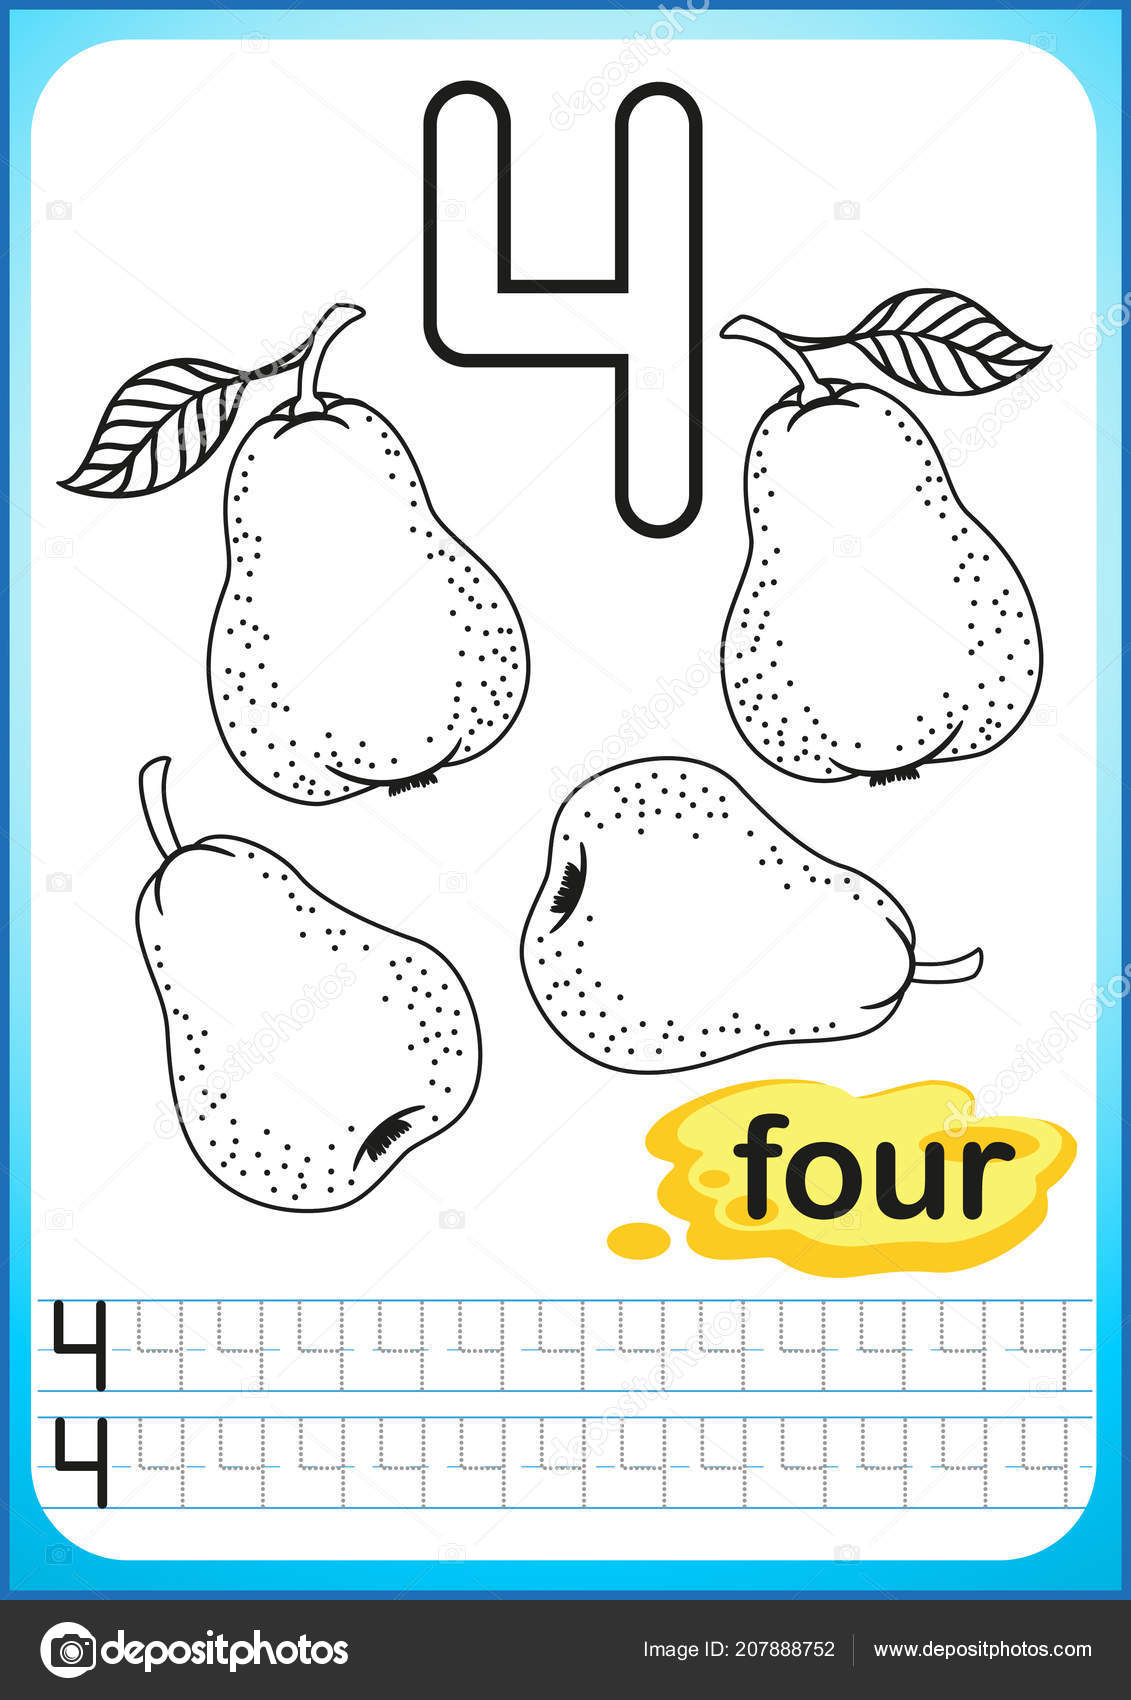 Printable worksheet kindergarten preschool exercises writing numbers simple level difficulty stock vector by natasha